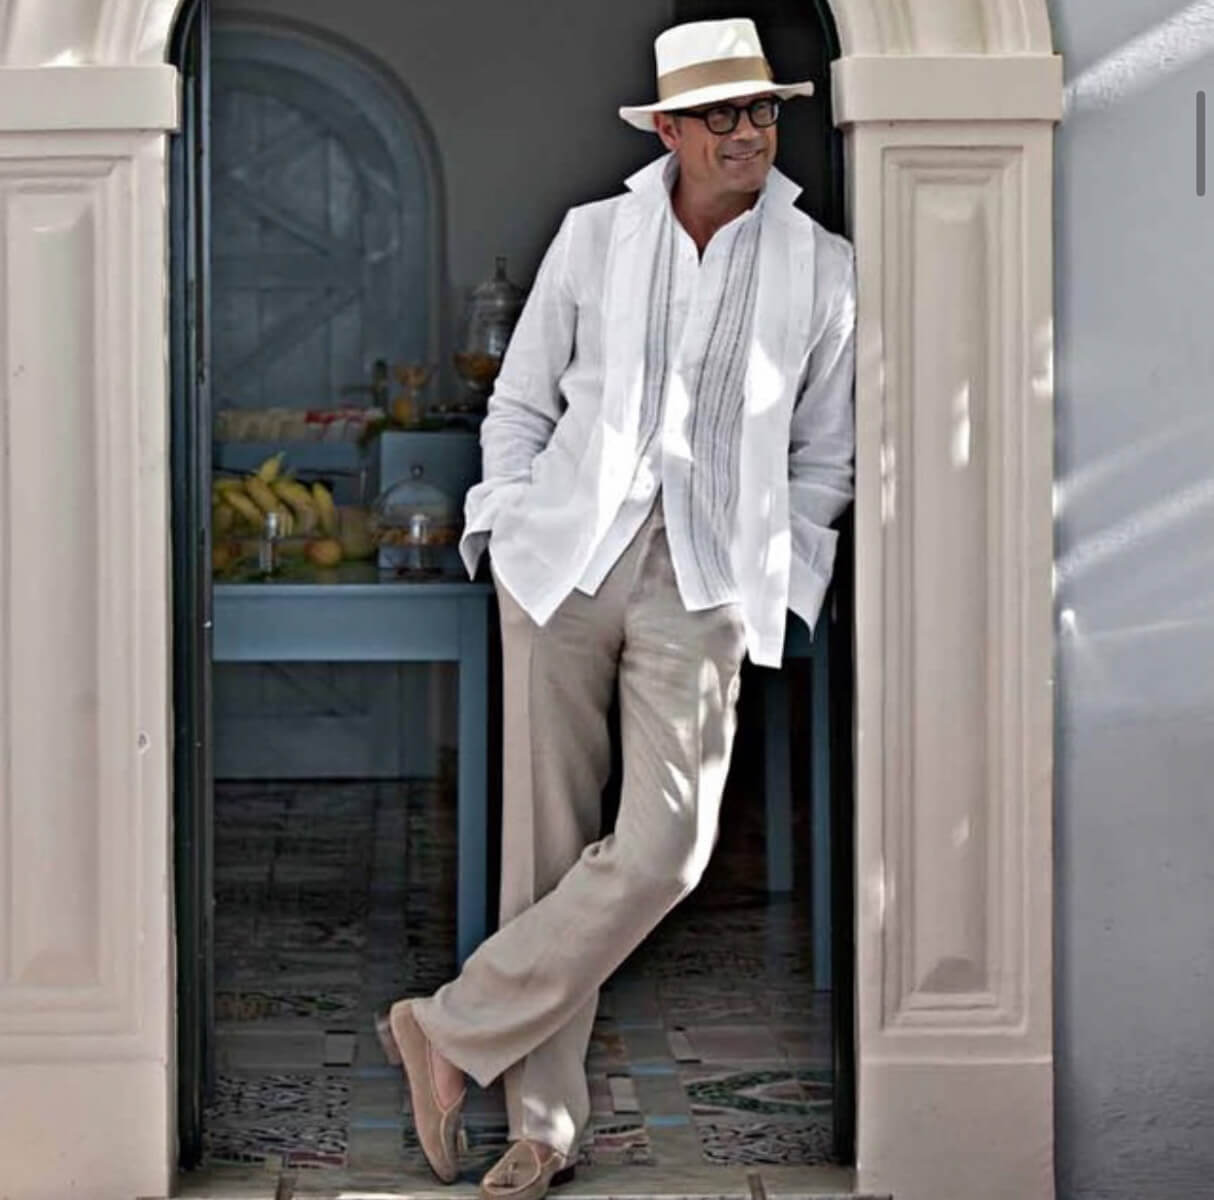 Pantalone Brezza 100% capri for man linen nut trouser worn by model